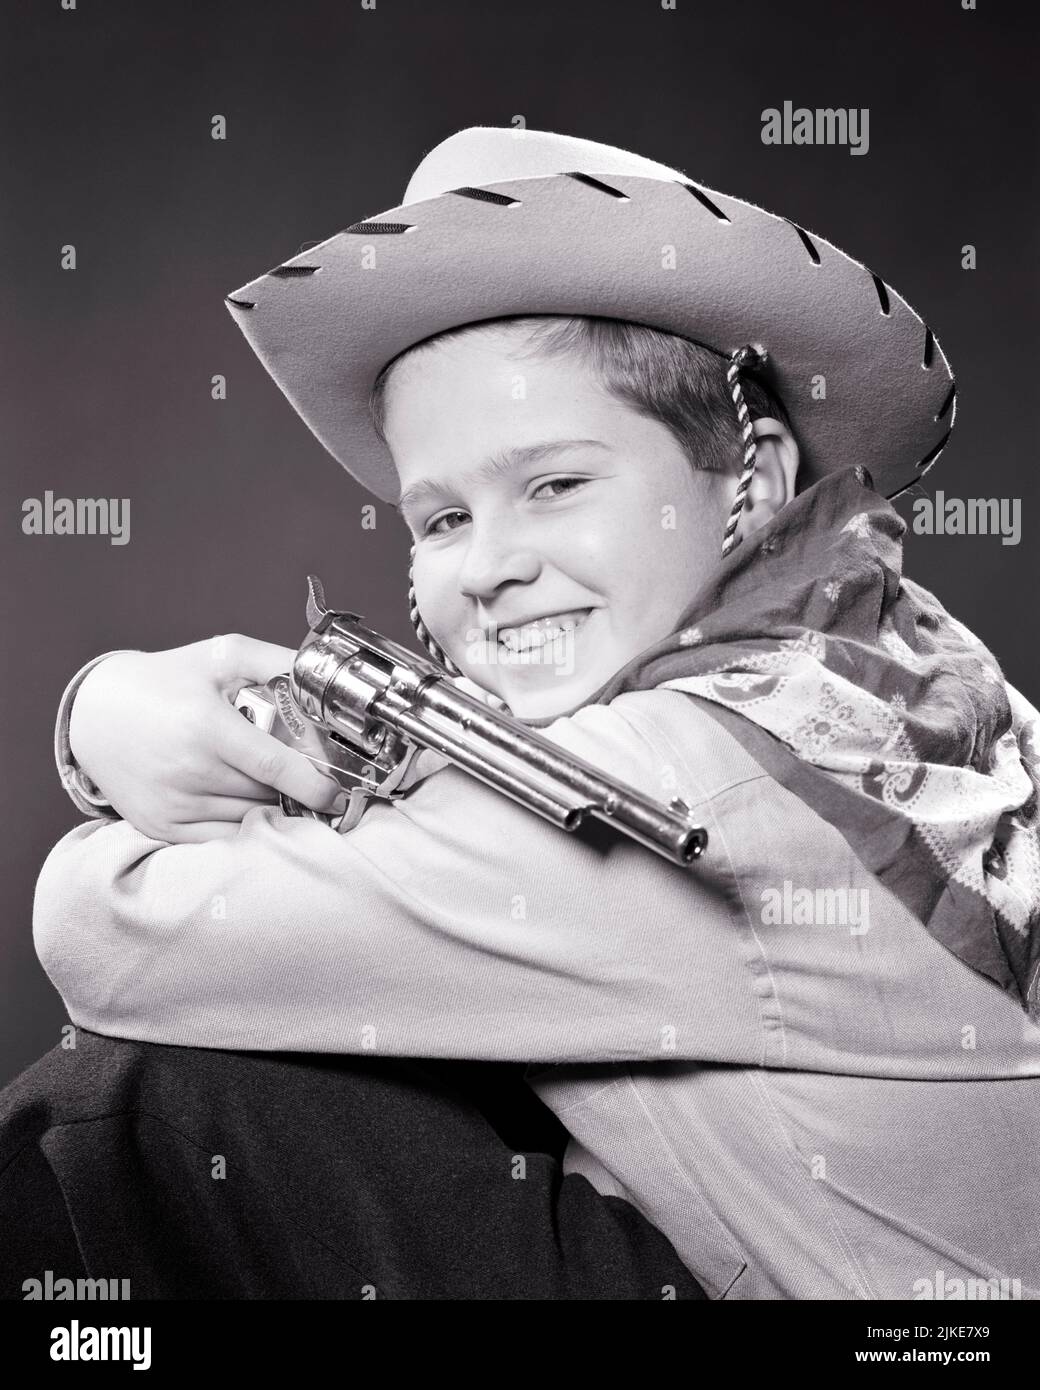 Western gun at camera hi-res stock photography and images - Alamy